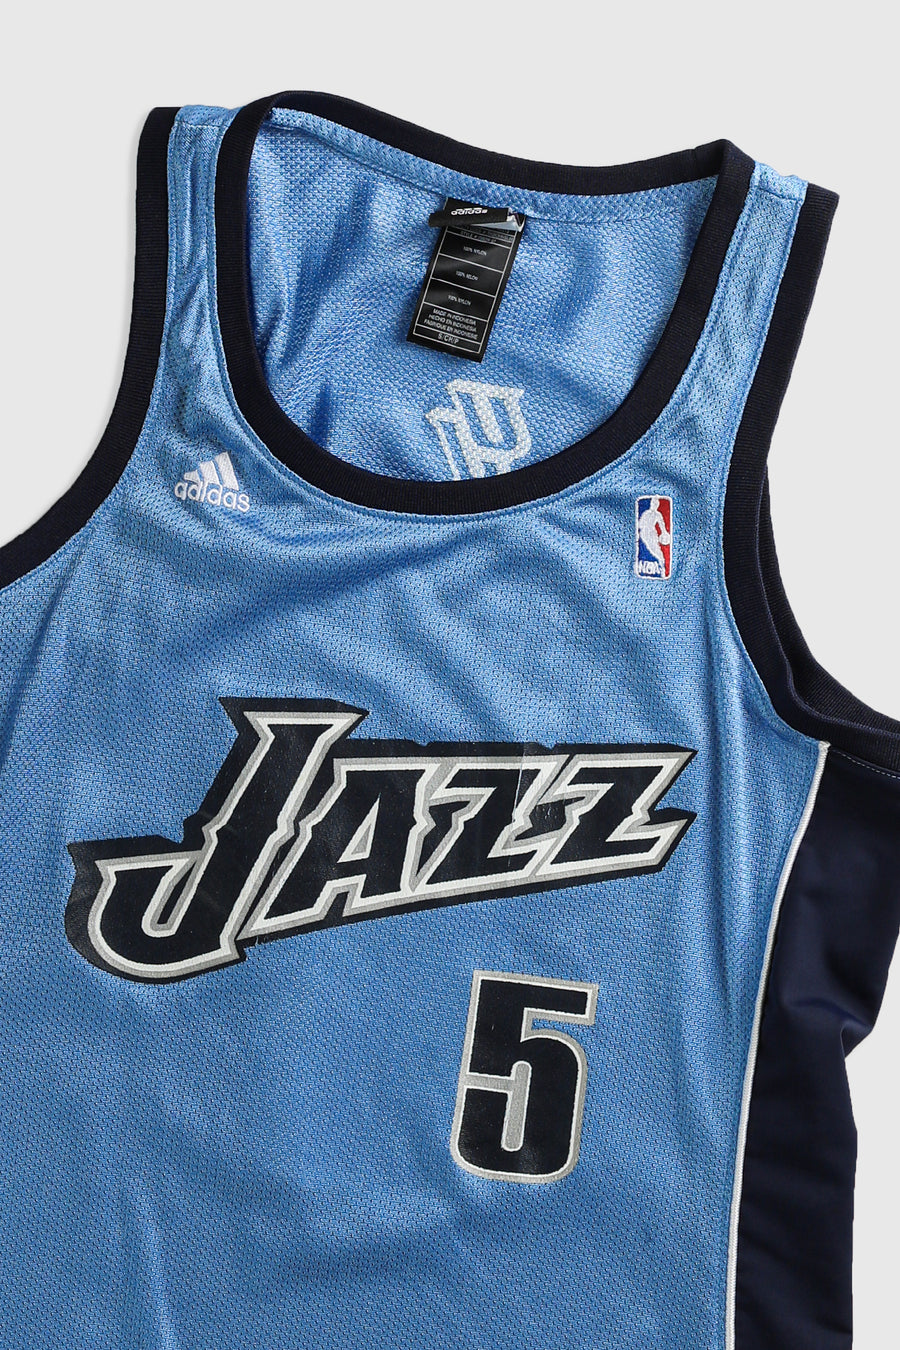 Vintage Jazz NBA Jersey